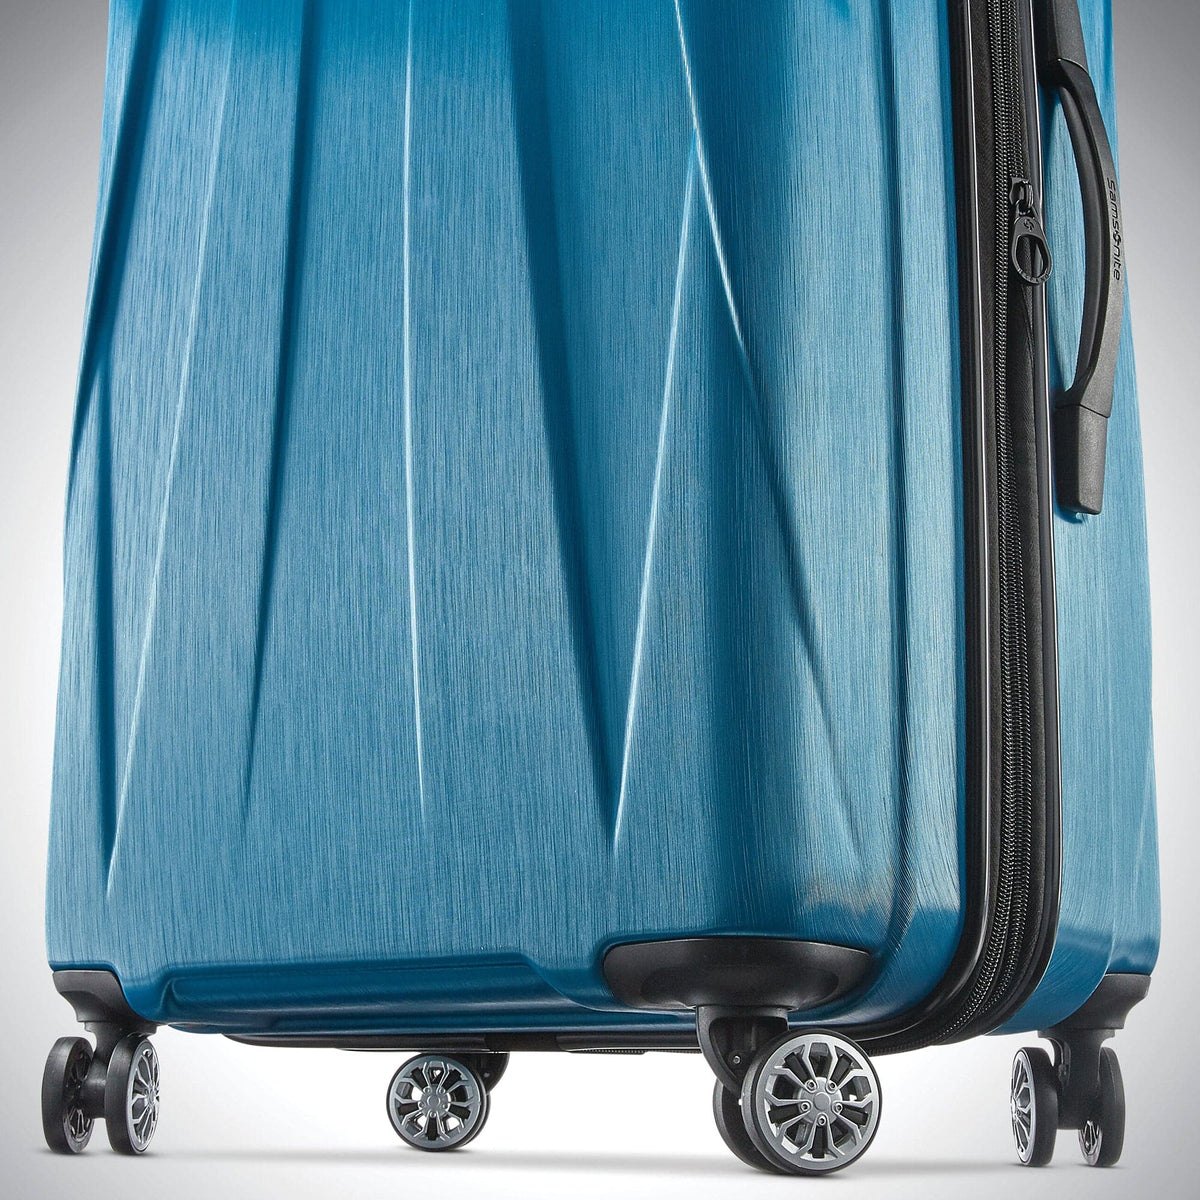 Samsonite Centric 2 Medium Spinner Luggage